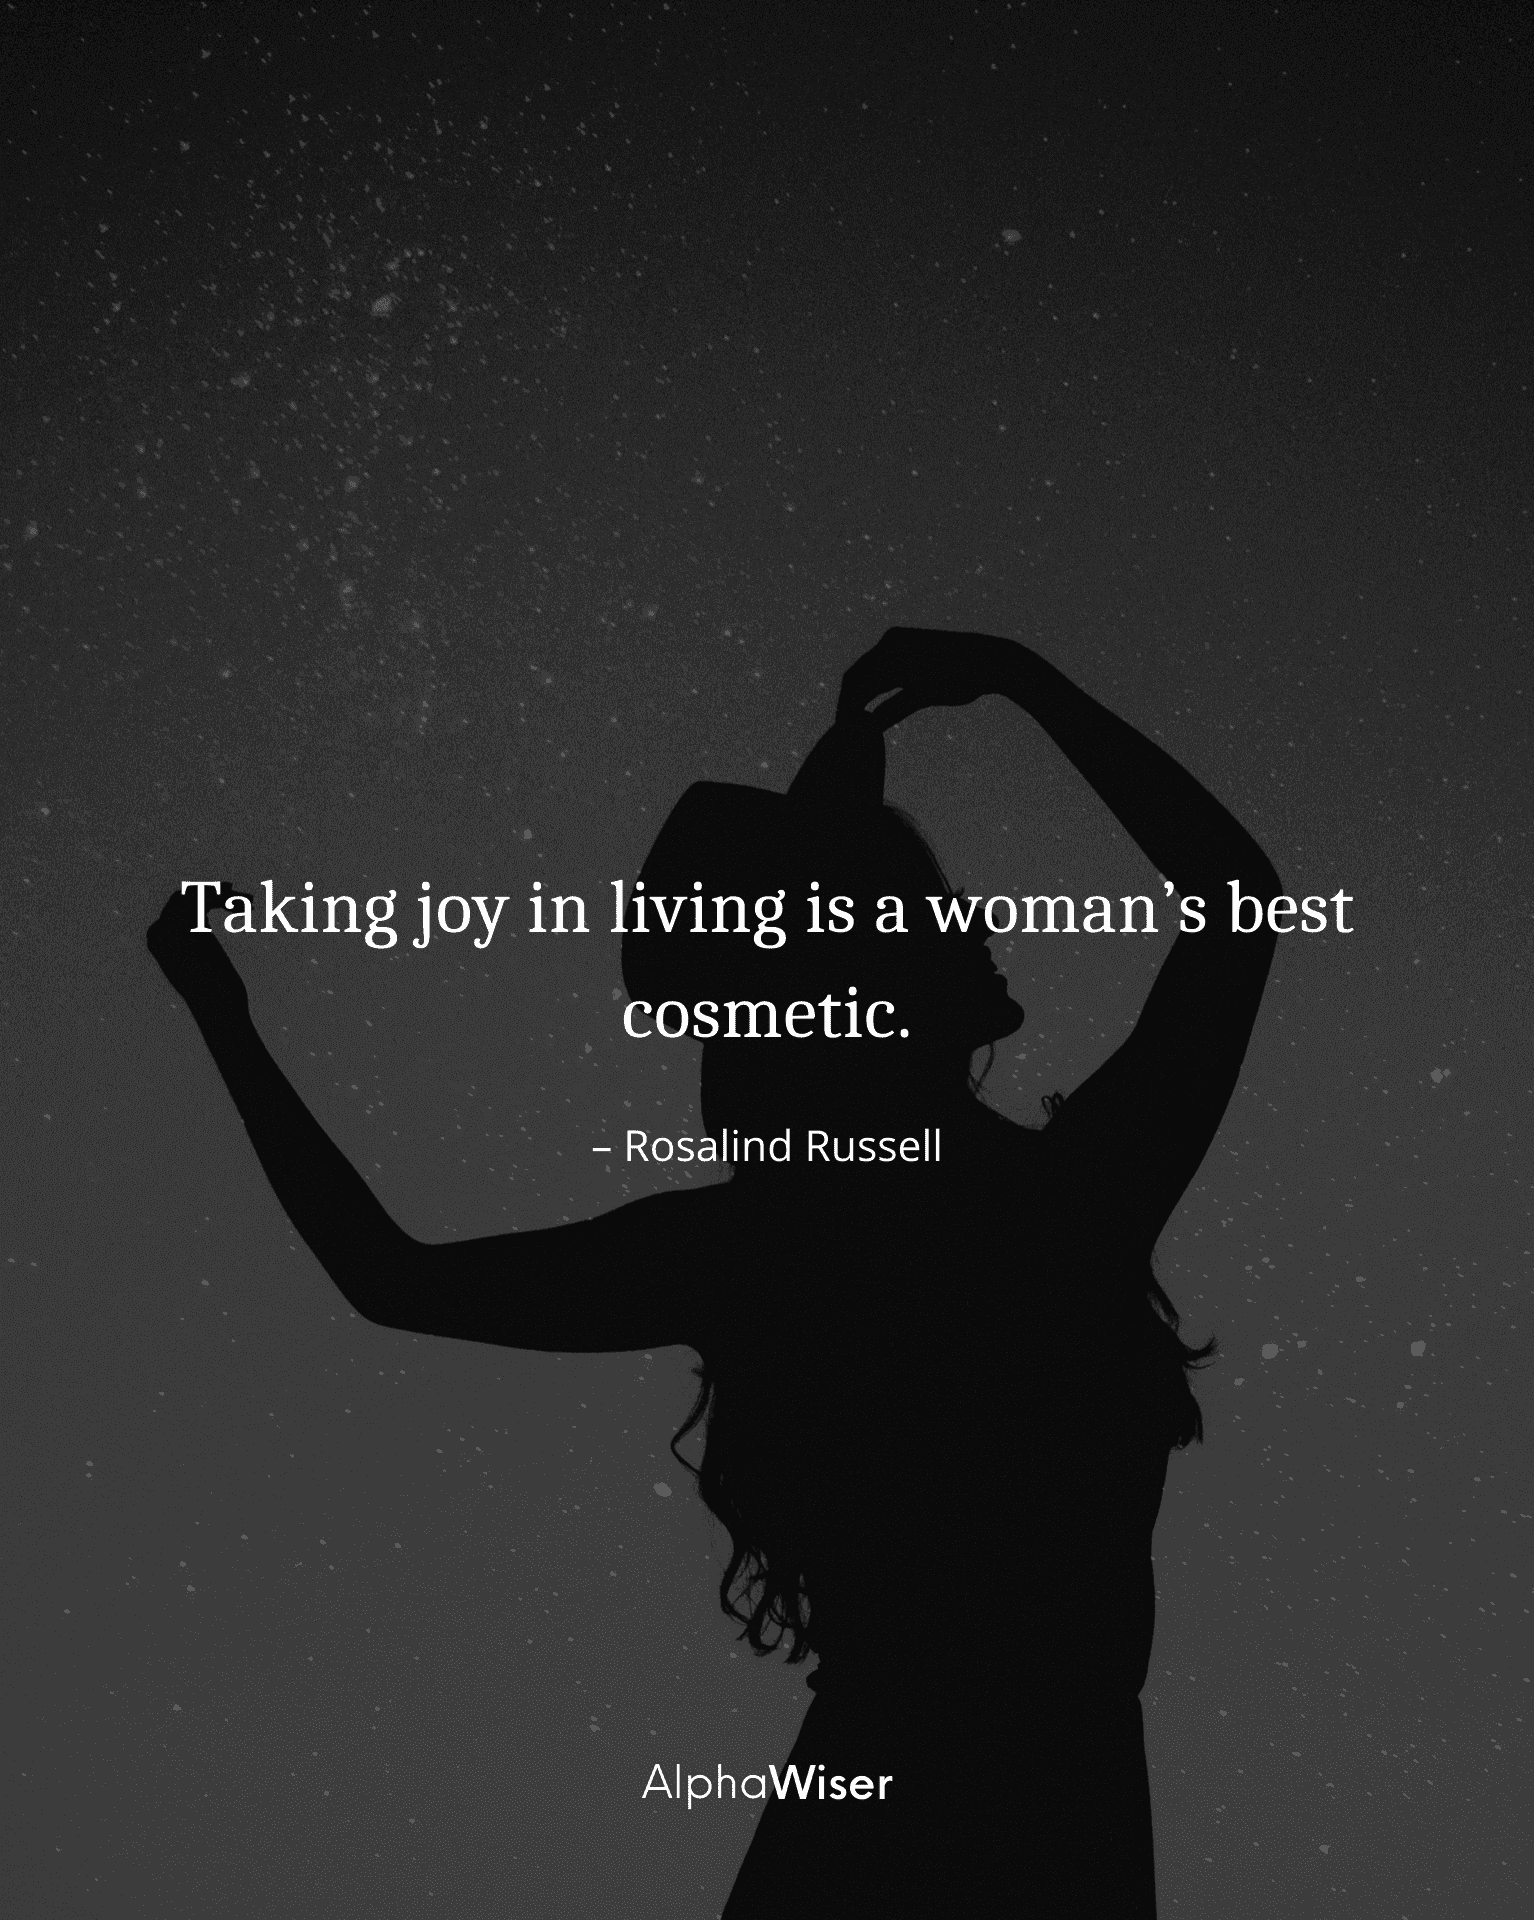 Taking joy in living is a woman’s best cosmetic.